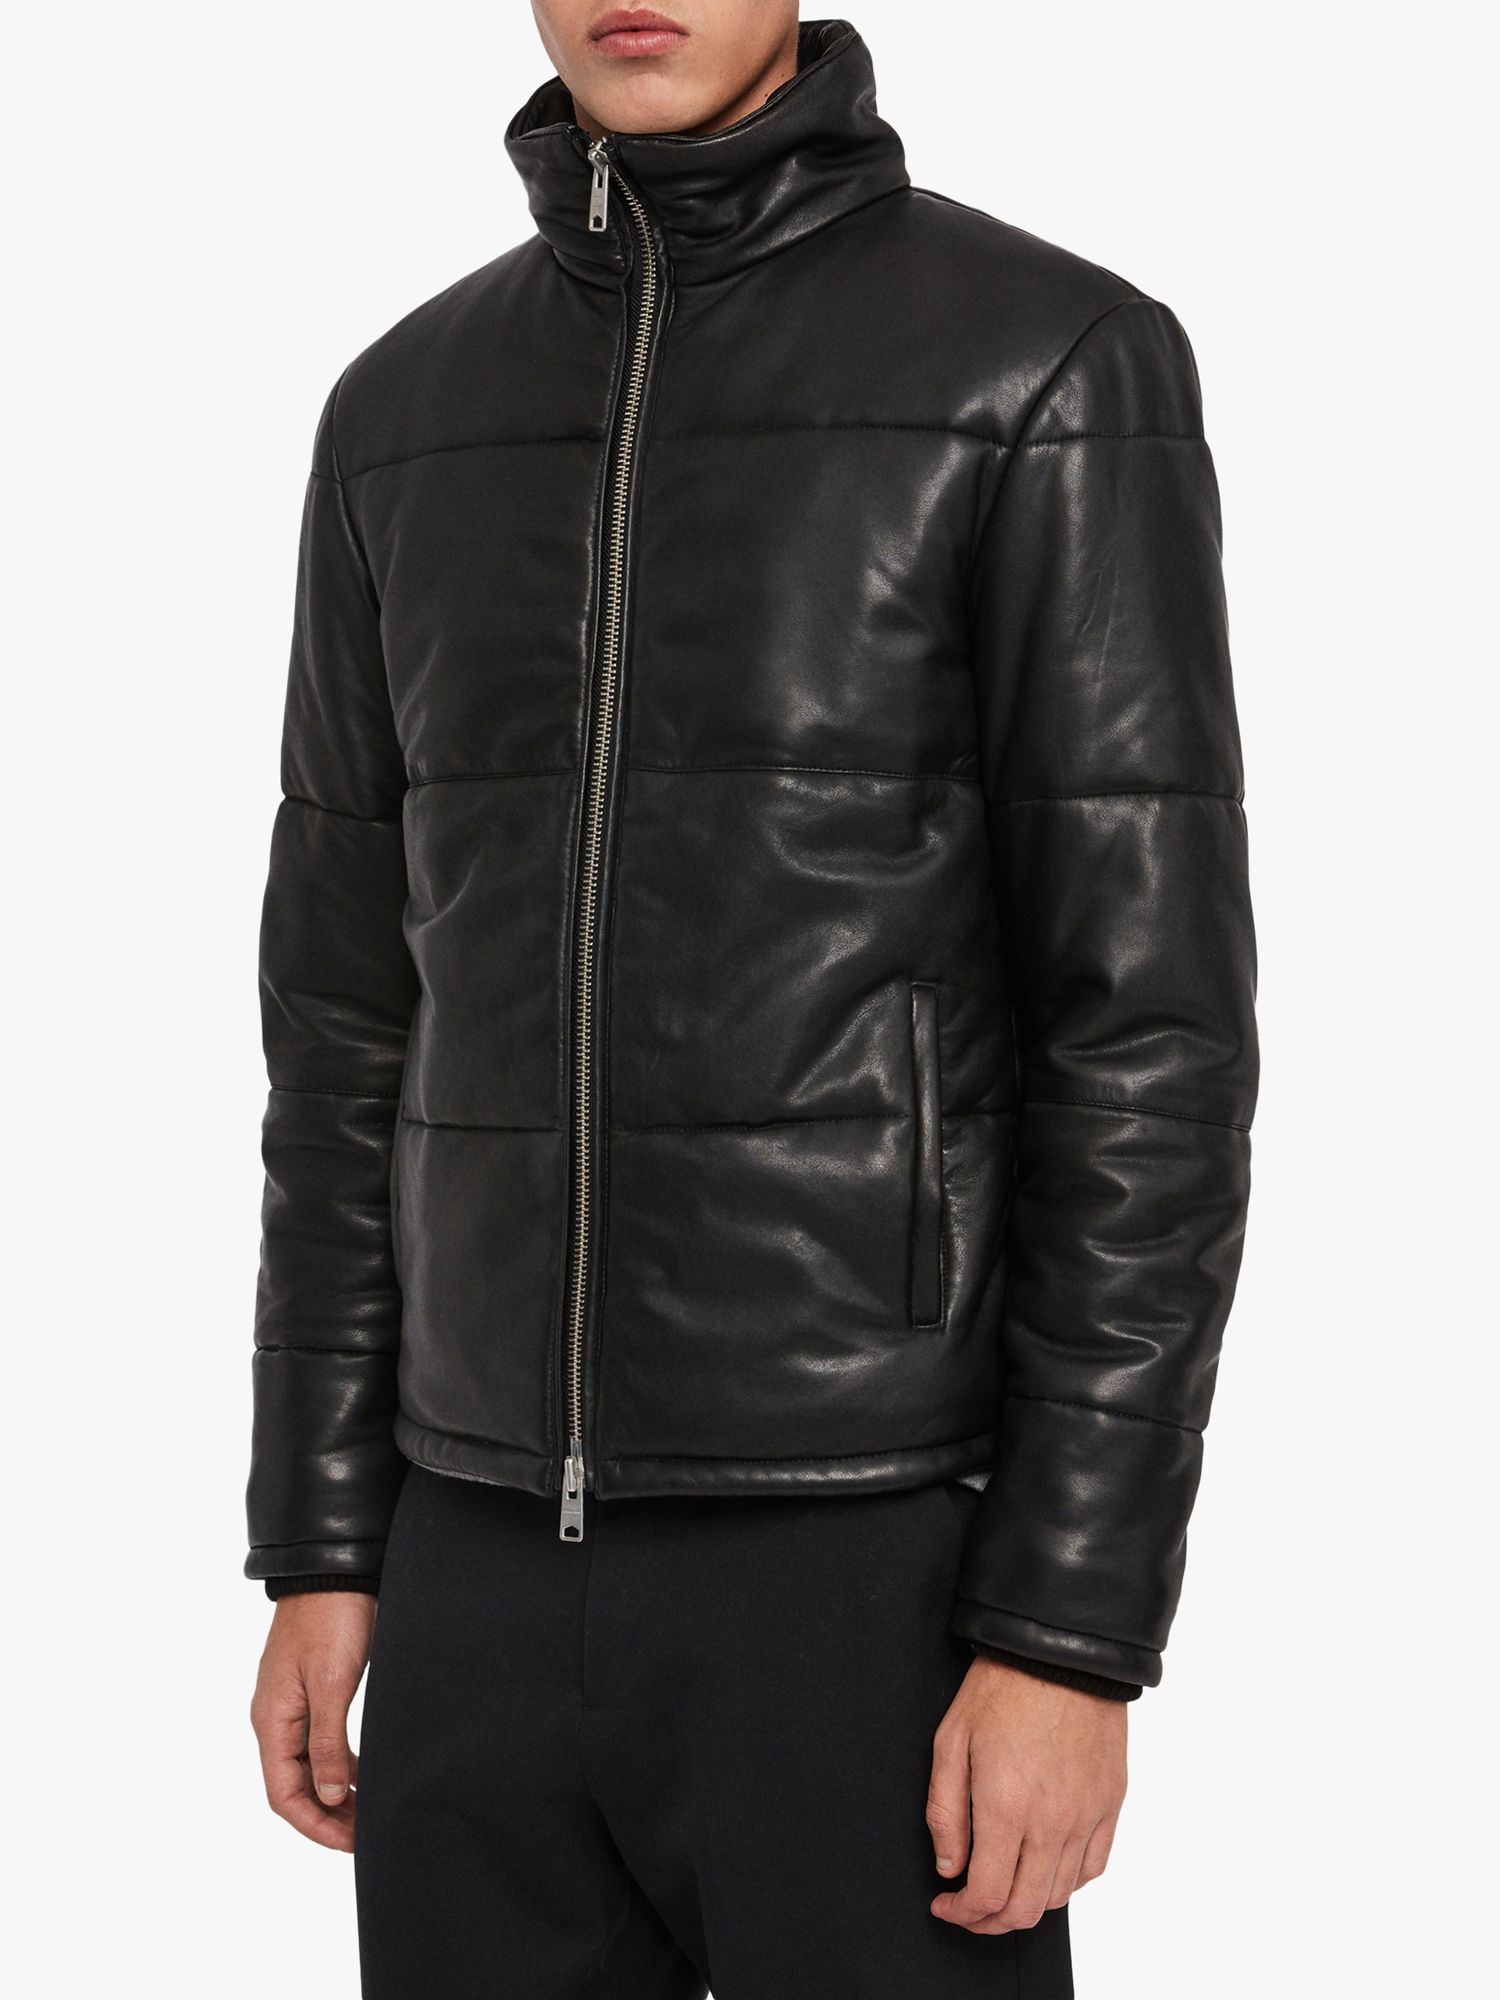 AllSaints Coronet Leather Puffer Jacket, Black at John Lewis & Partners